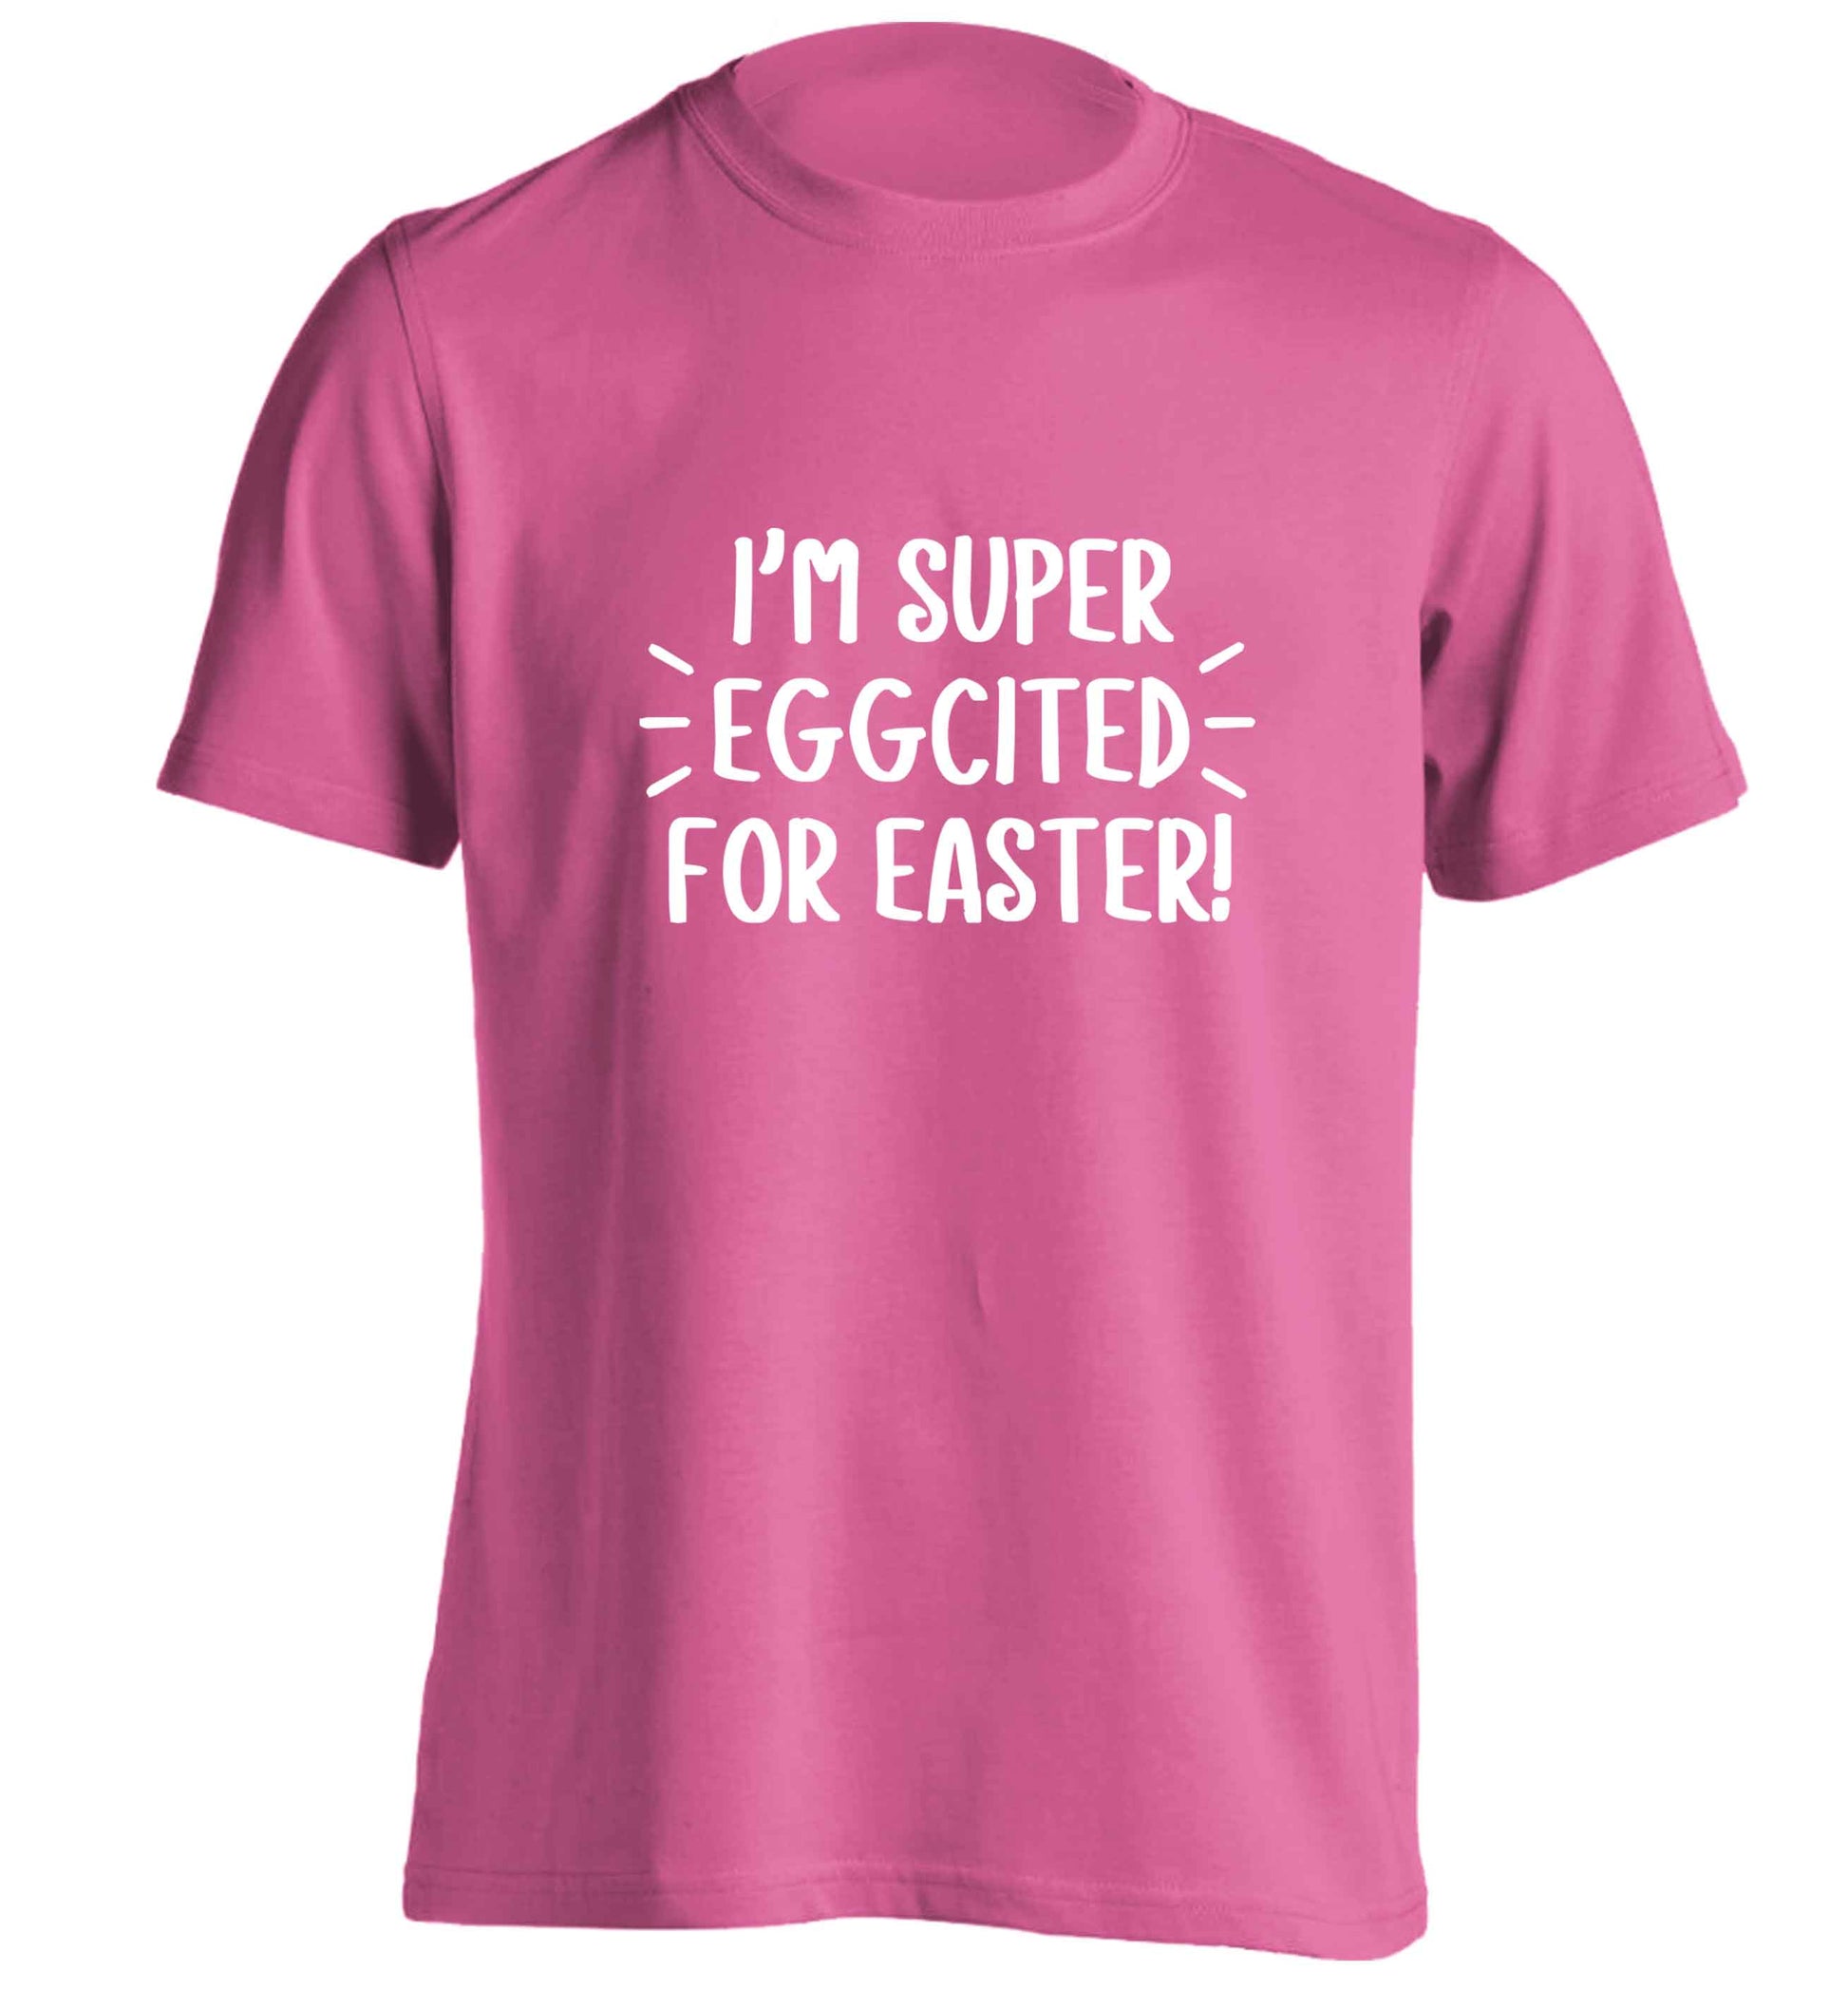 I'm super eggcited for Easter adults unisex pink Tshirt 2XL